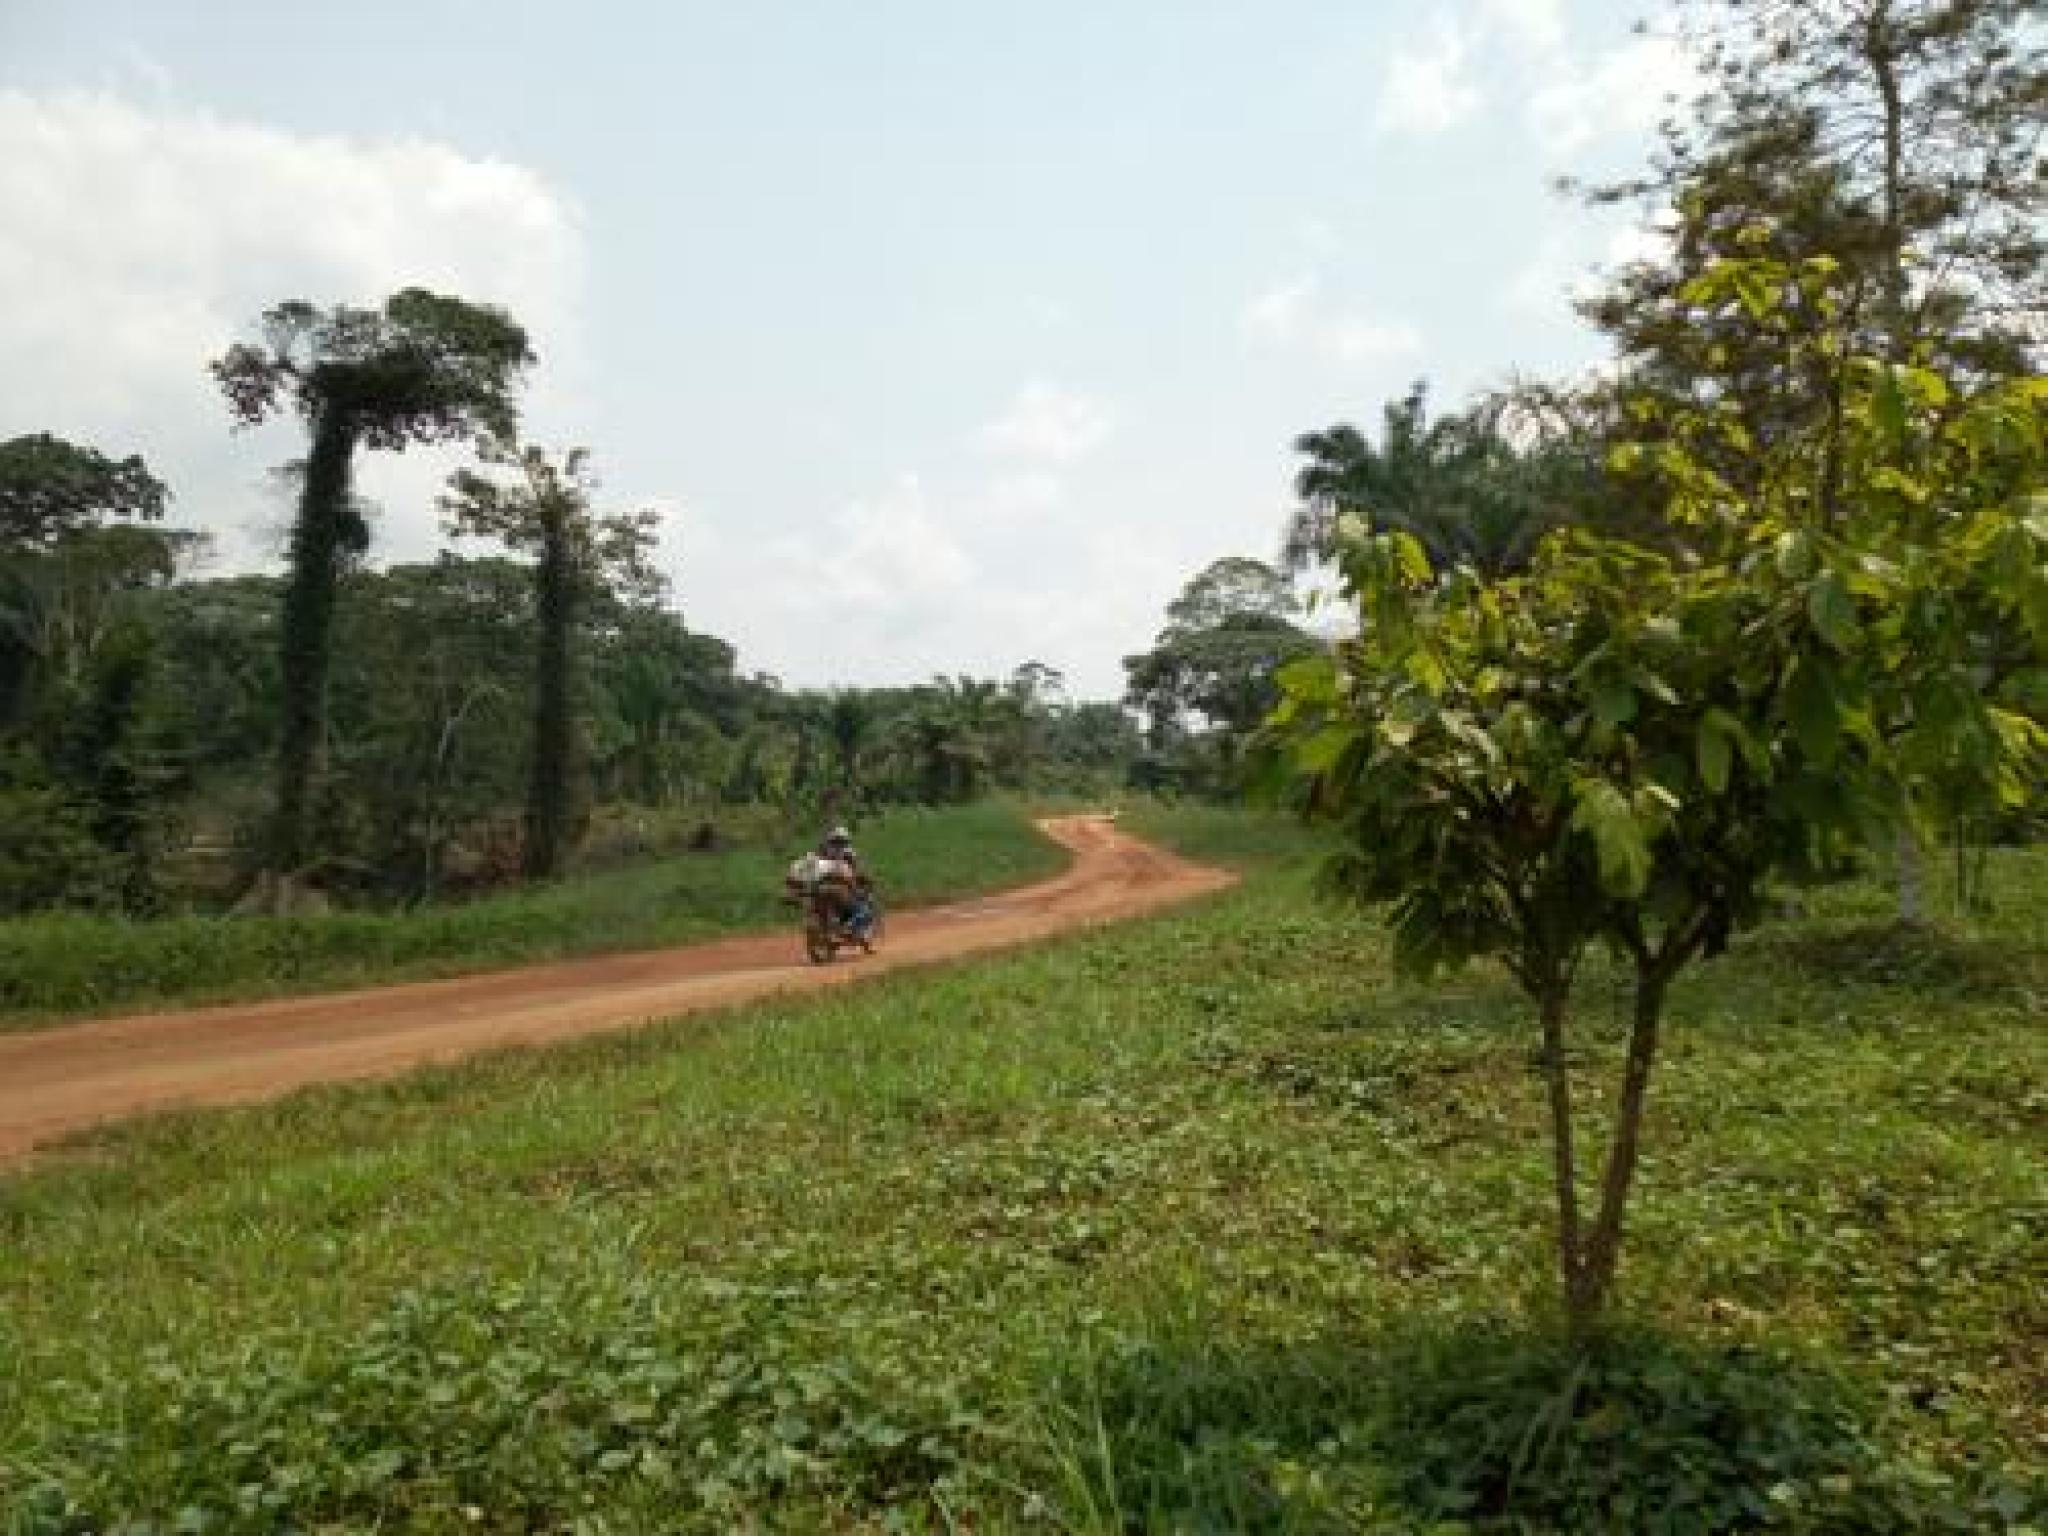 La route qui relie Mamove et Oicha dans le territoire de Beni au Nord-Kivu